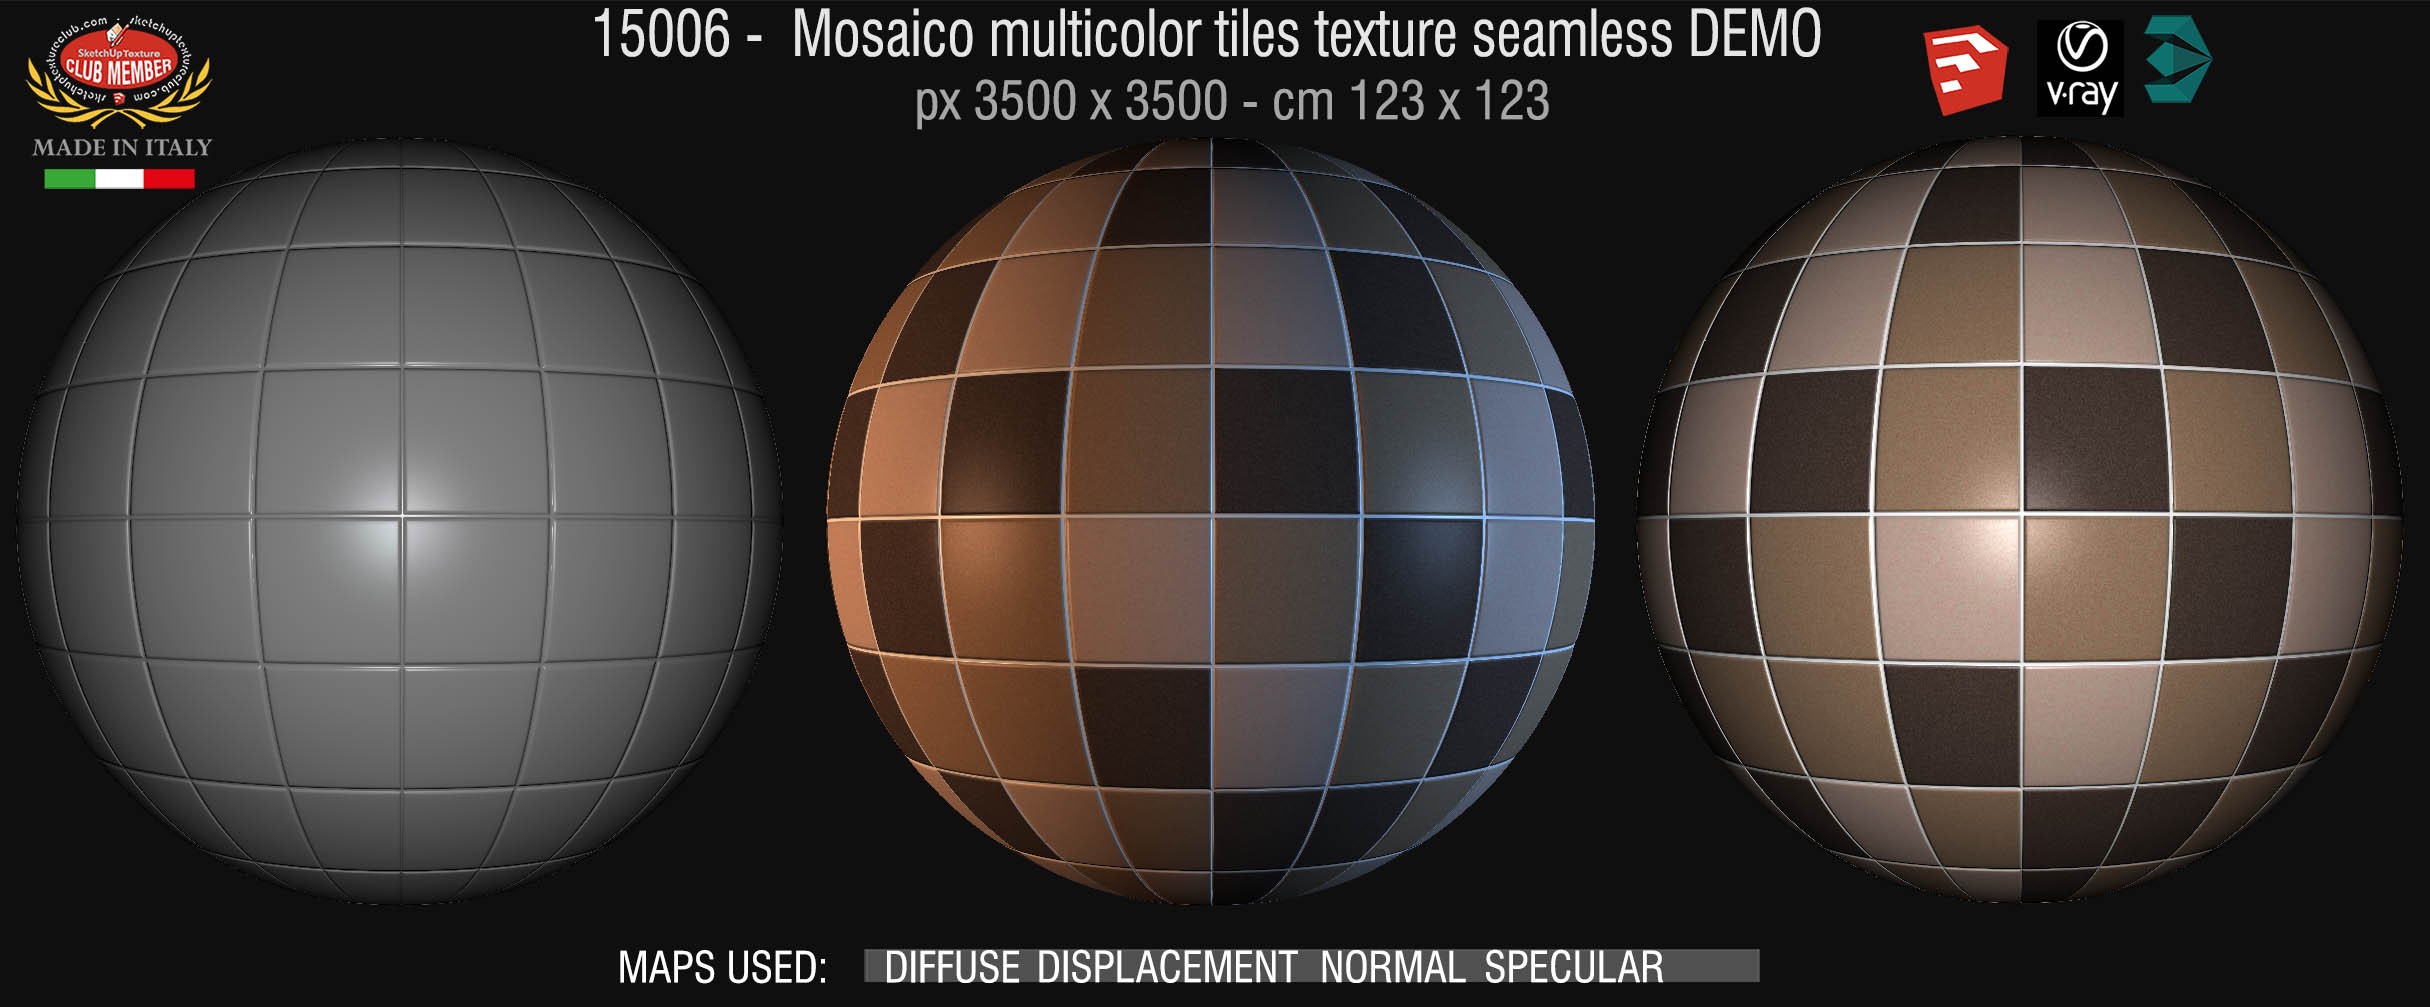 15006 Mosaico multicolor tiles texture seamless + maps DEMO